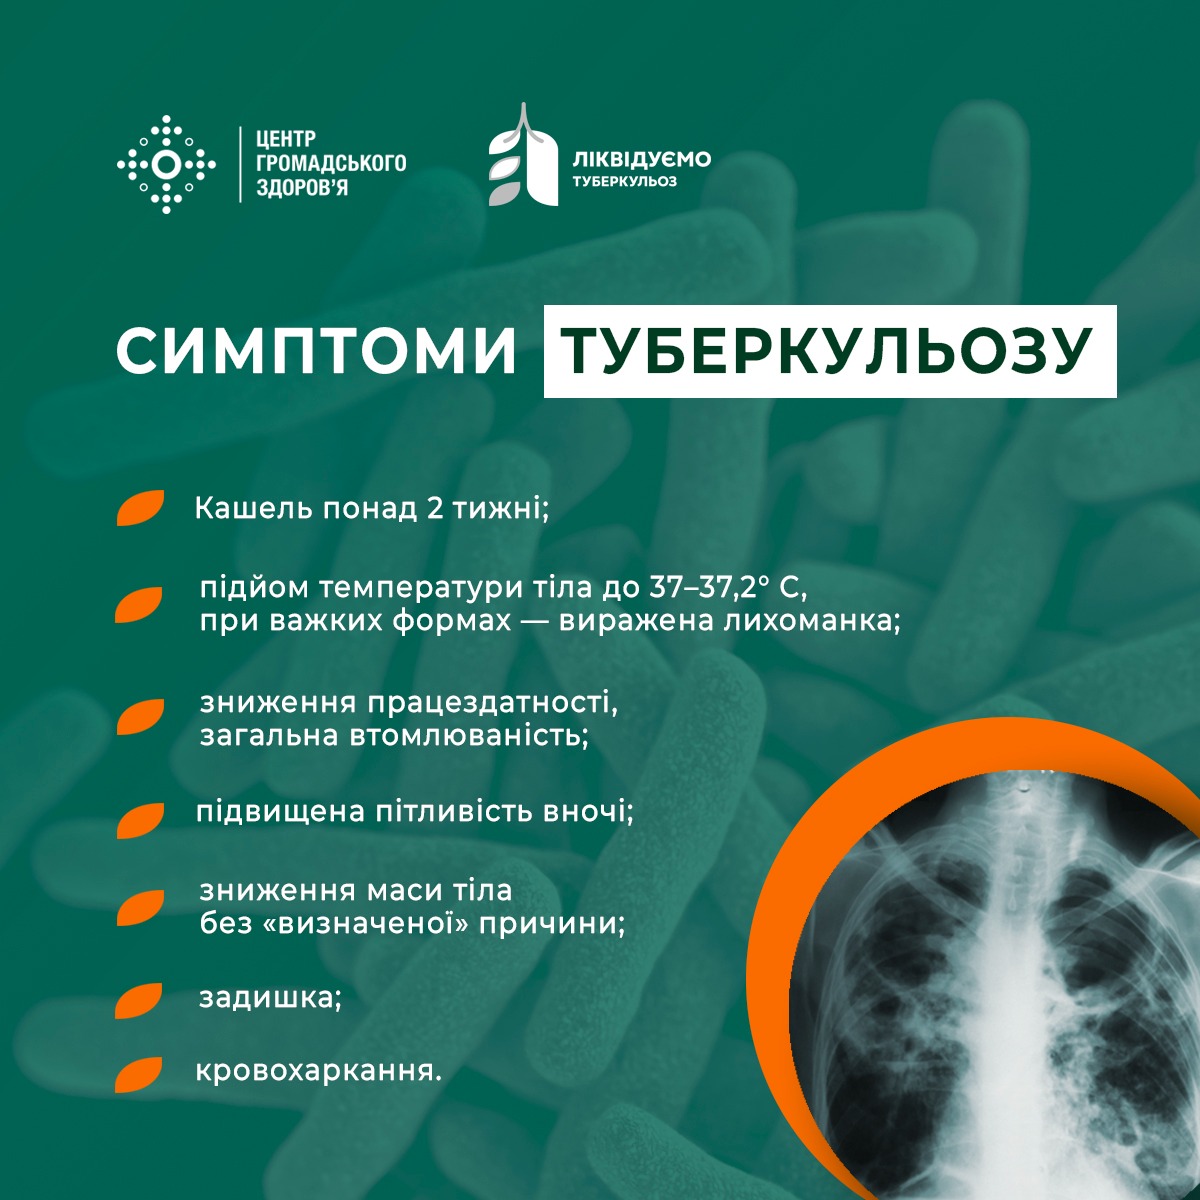 Смптоми туберкульозу